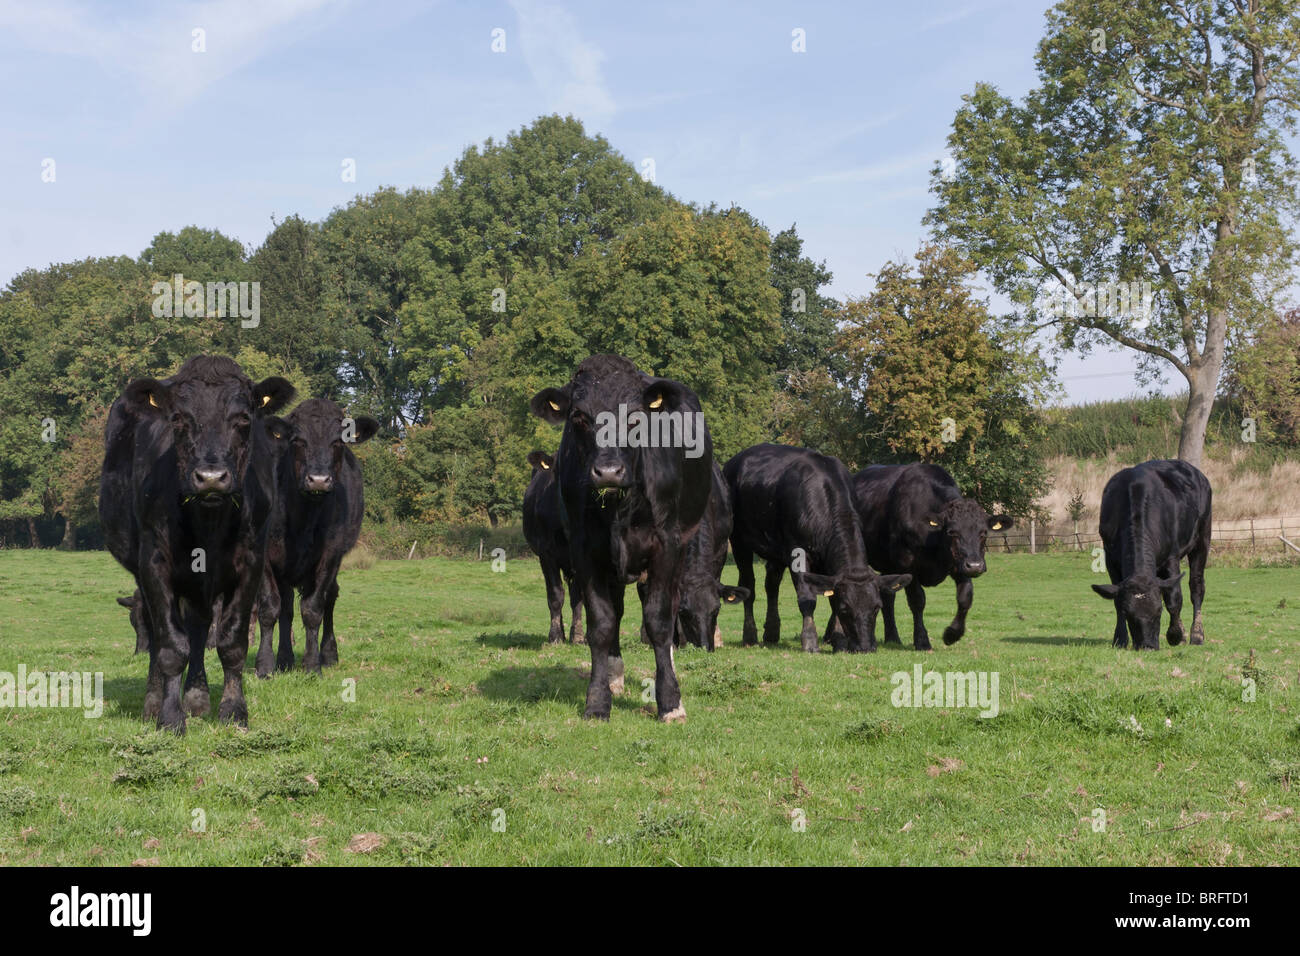 Black Steer Farm Animals in Field. Livestock Stock Photo